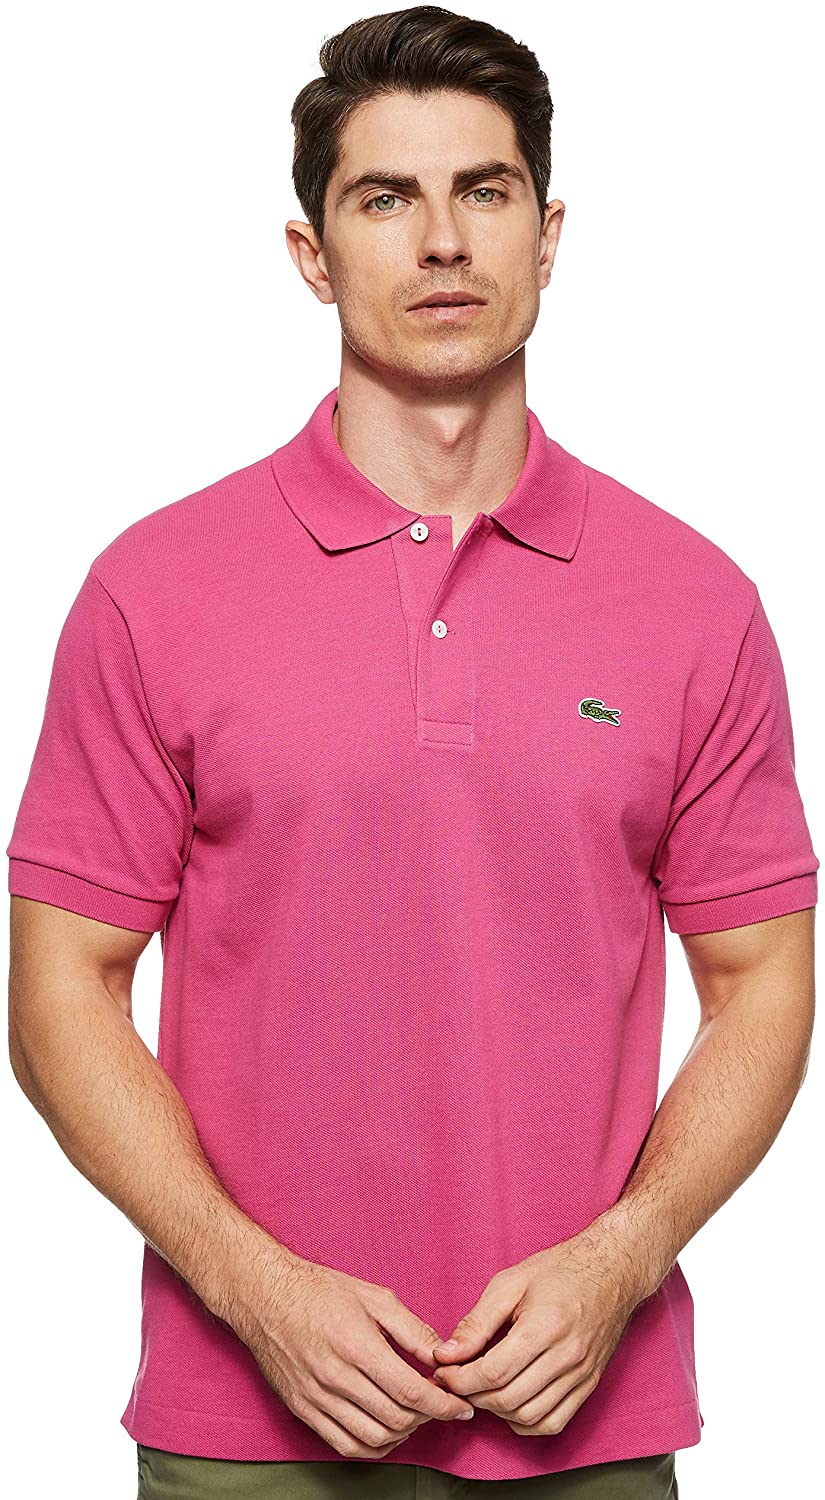 Lacoste Men's Legacy Short Sleeve L.12.12 Pique Polo Shirt